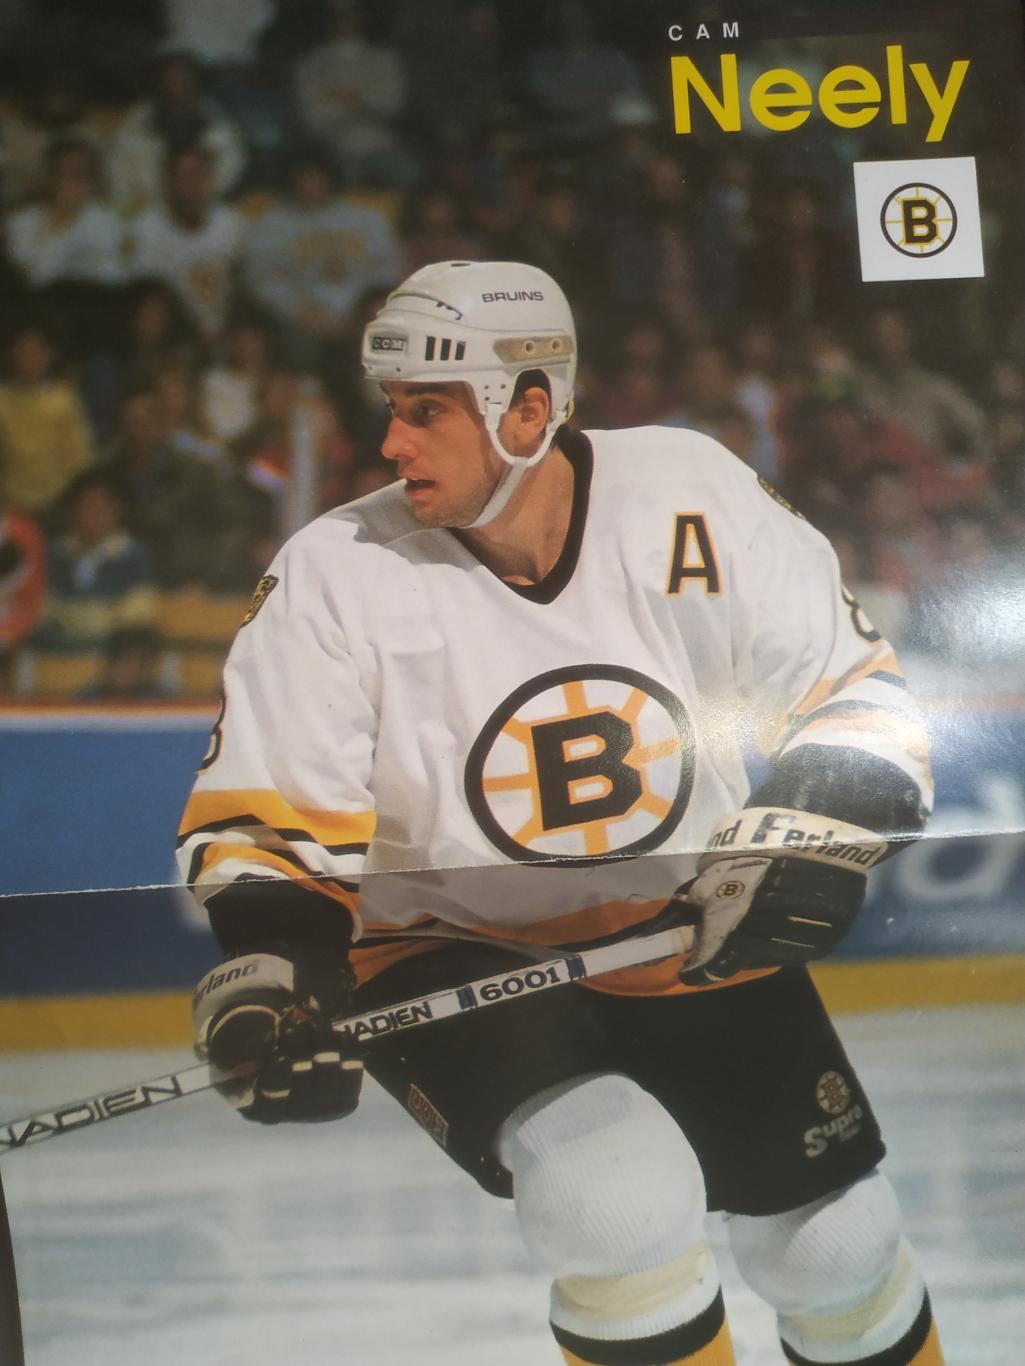 ХОККЕЙ ПОСТЕР НХЛ БОСТОН КЭМ НИЛИ POSTER NHL BOSTON CAM NEELY #8 А3